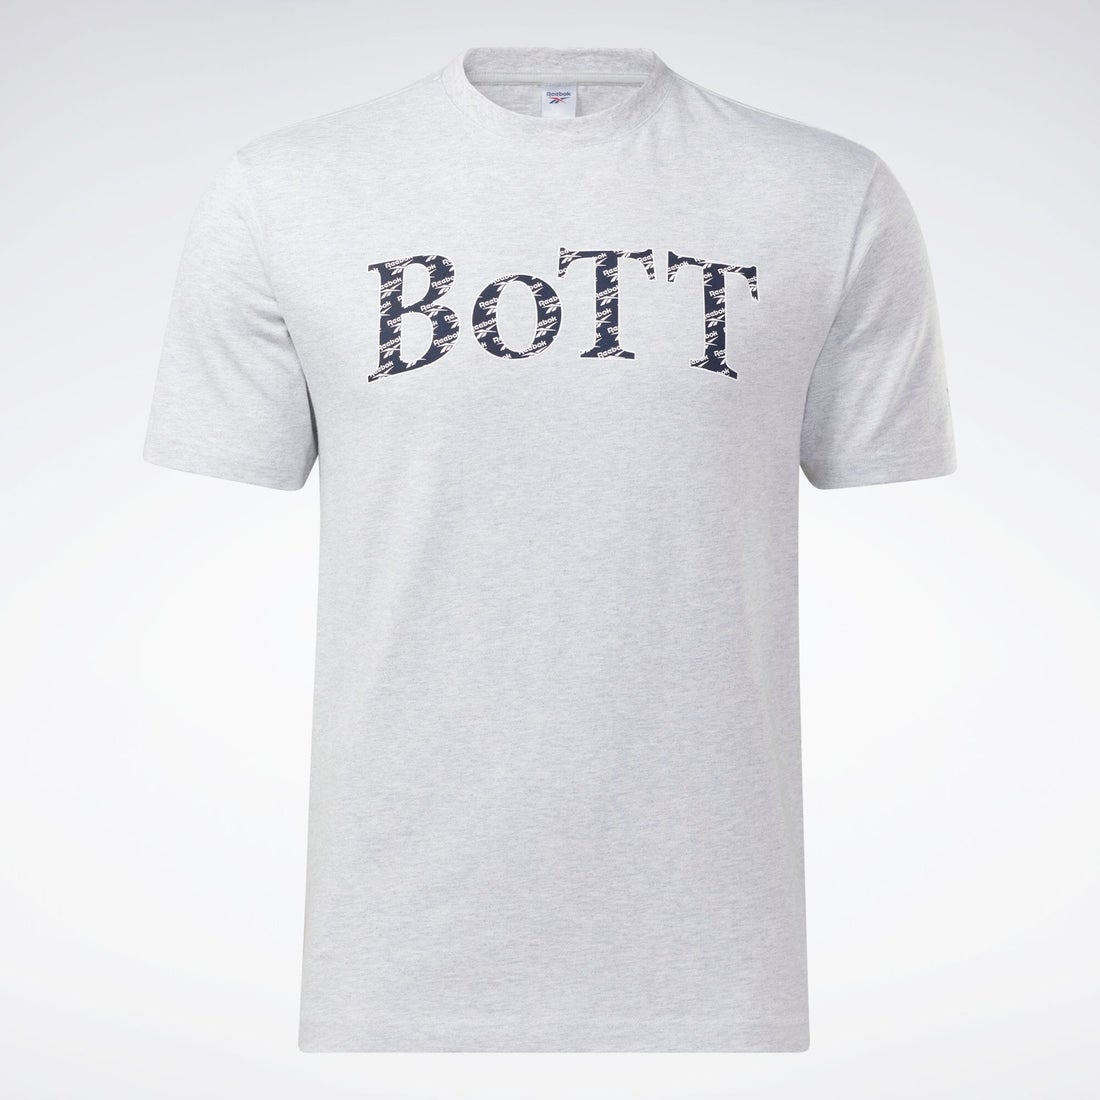 XXLサイズ 新品 REEBOK BoTT Tee Tシャツ グレー